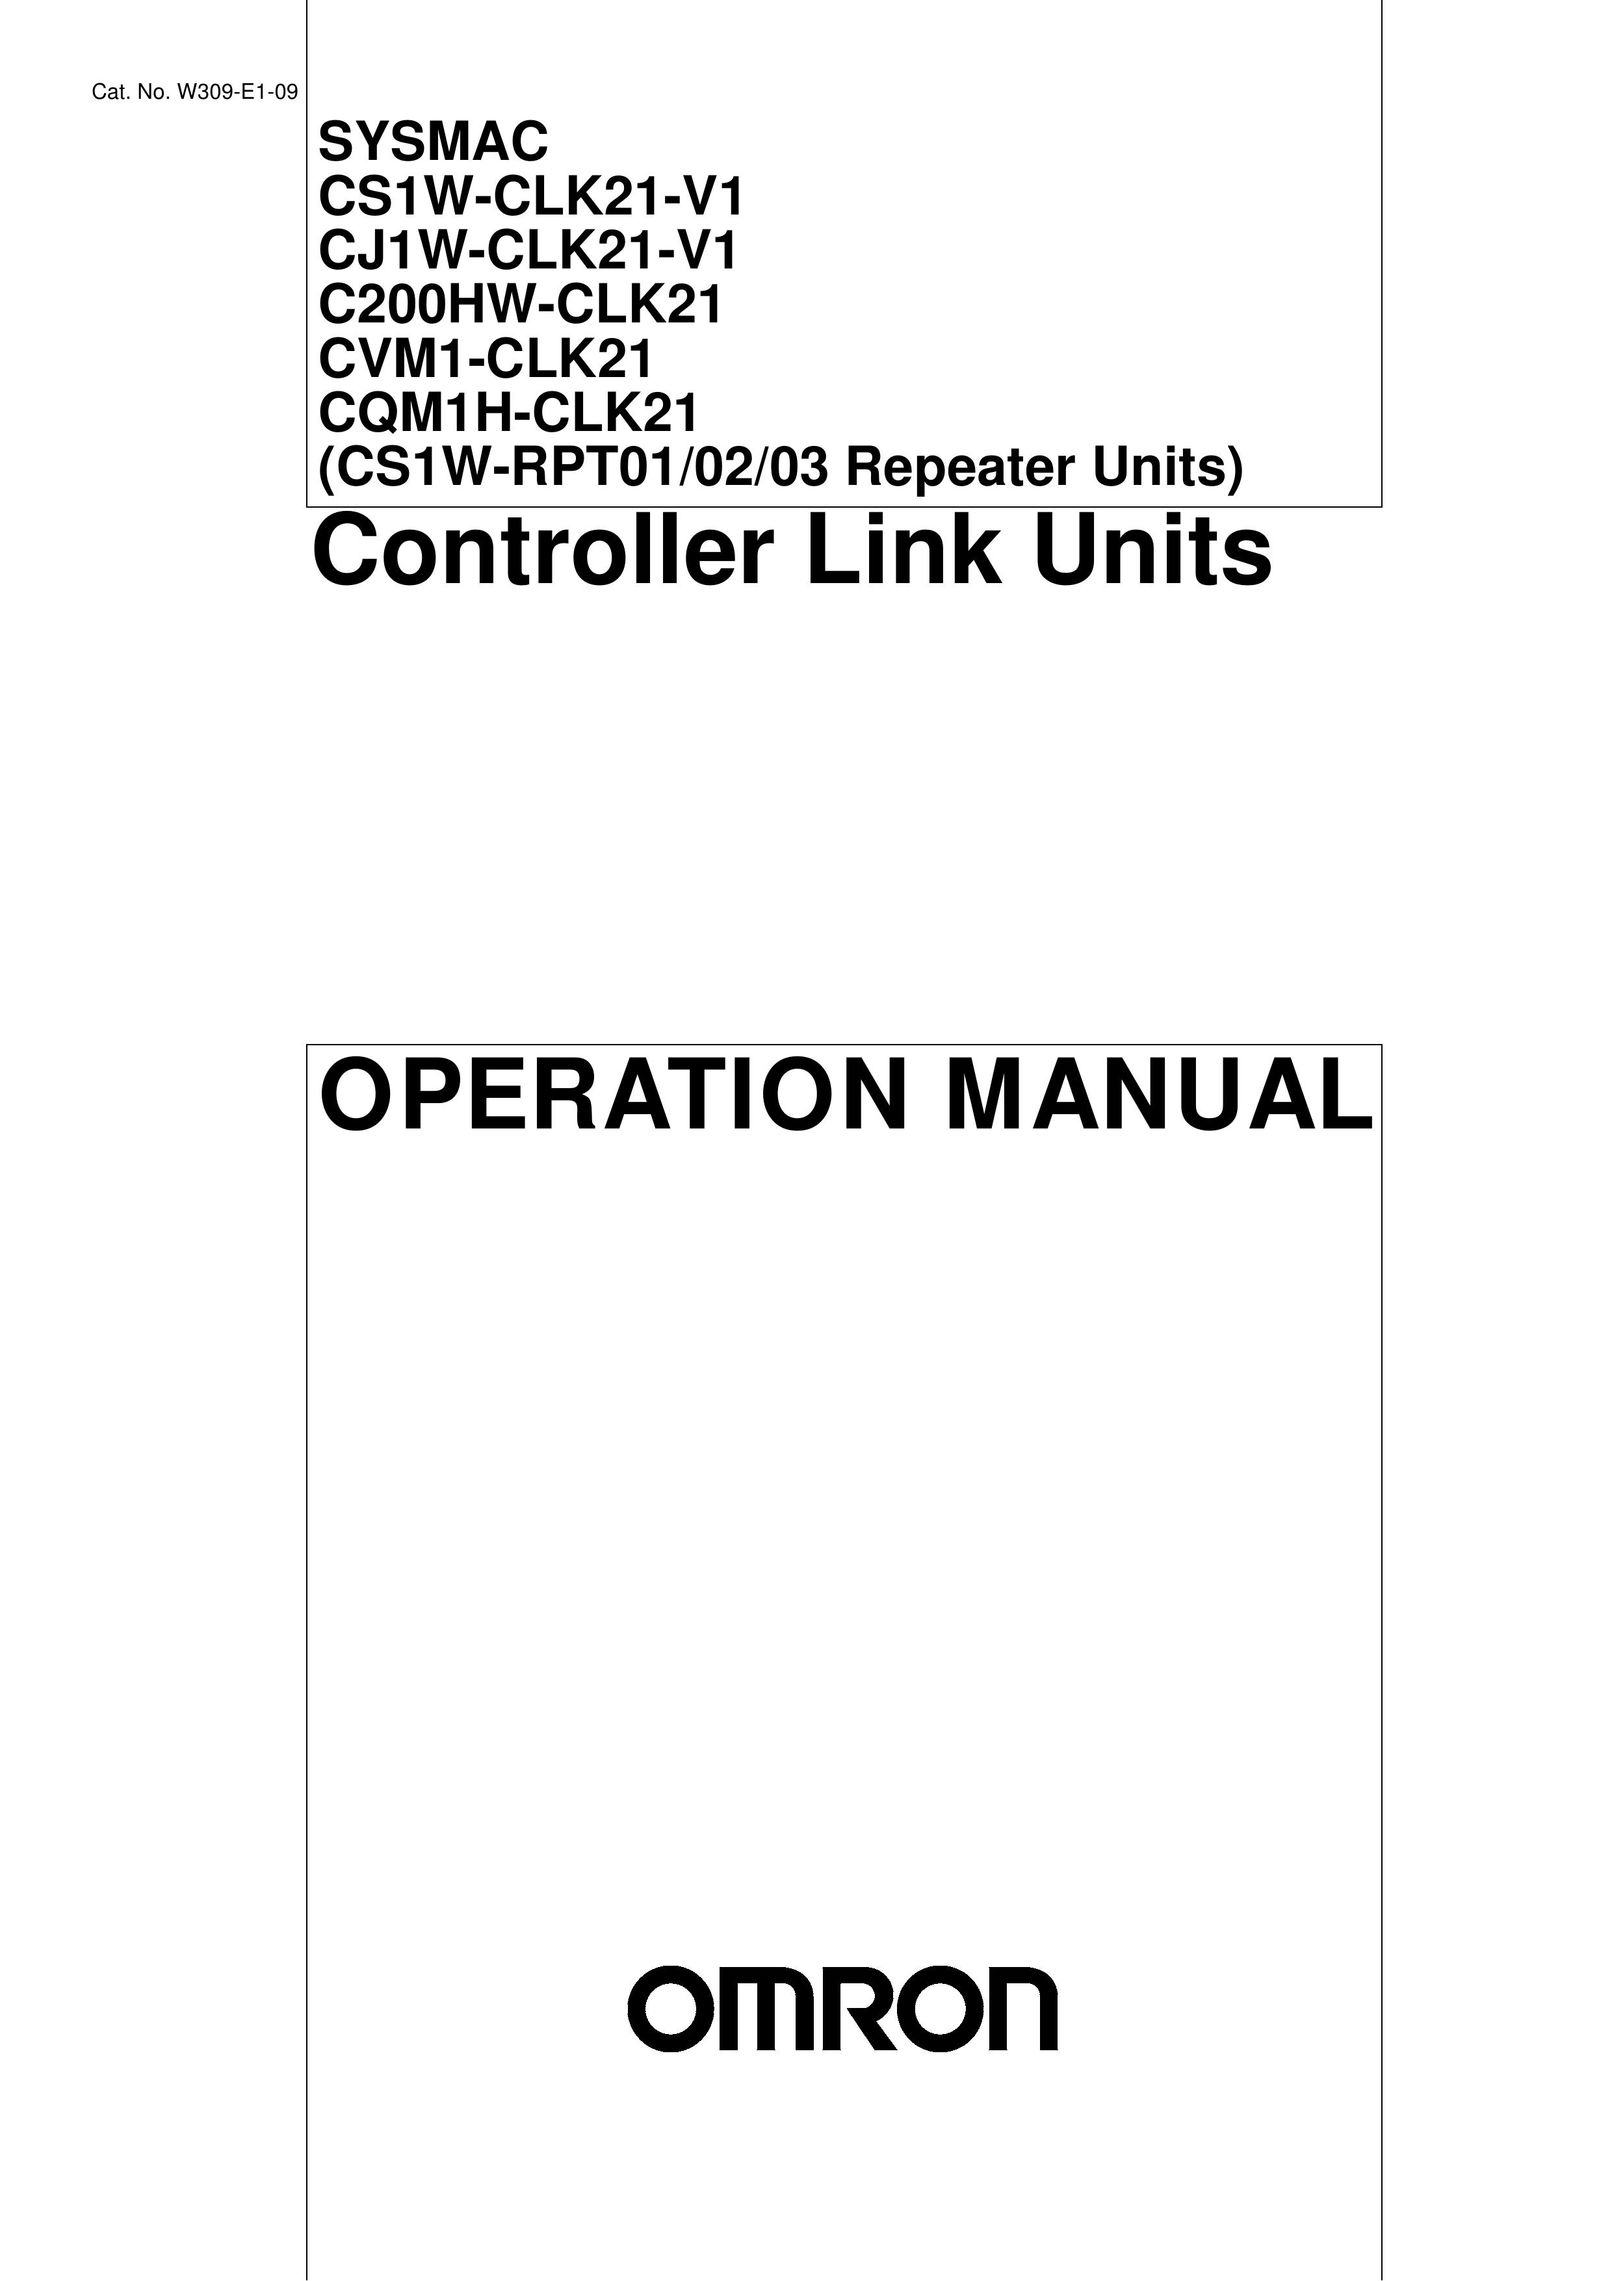 Omron C200HW-CLK21 Network Card User Manual